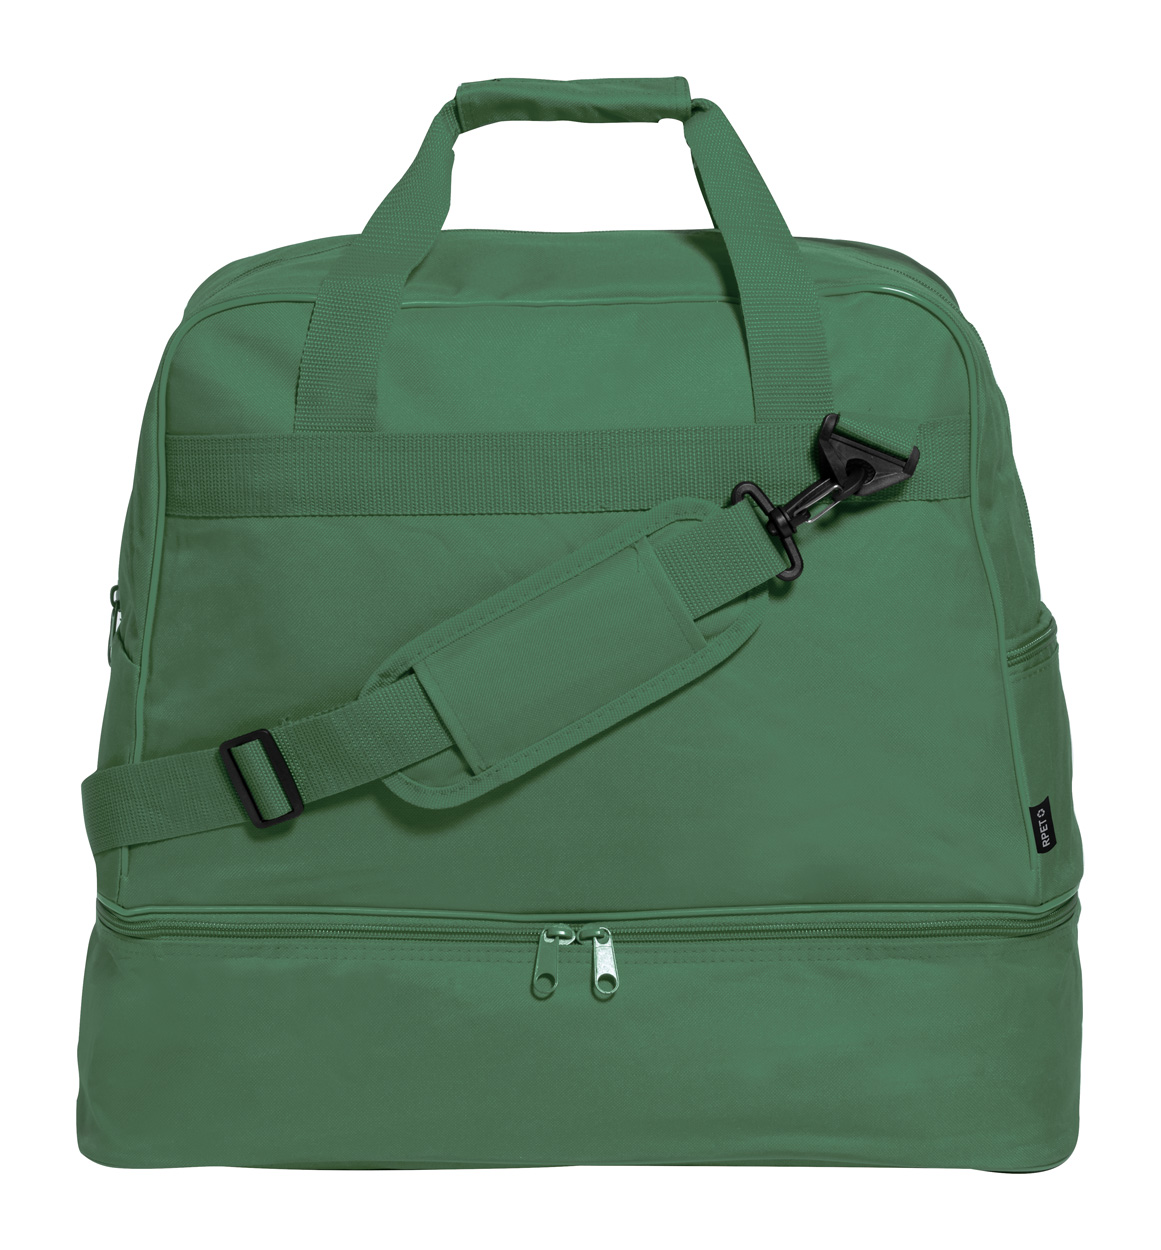 Wistol RPET sports bag - green